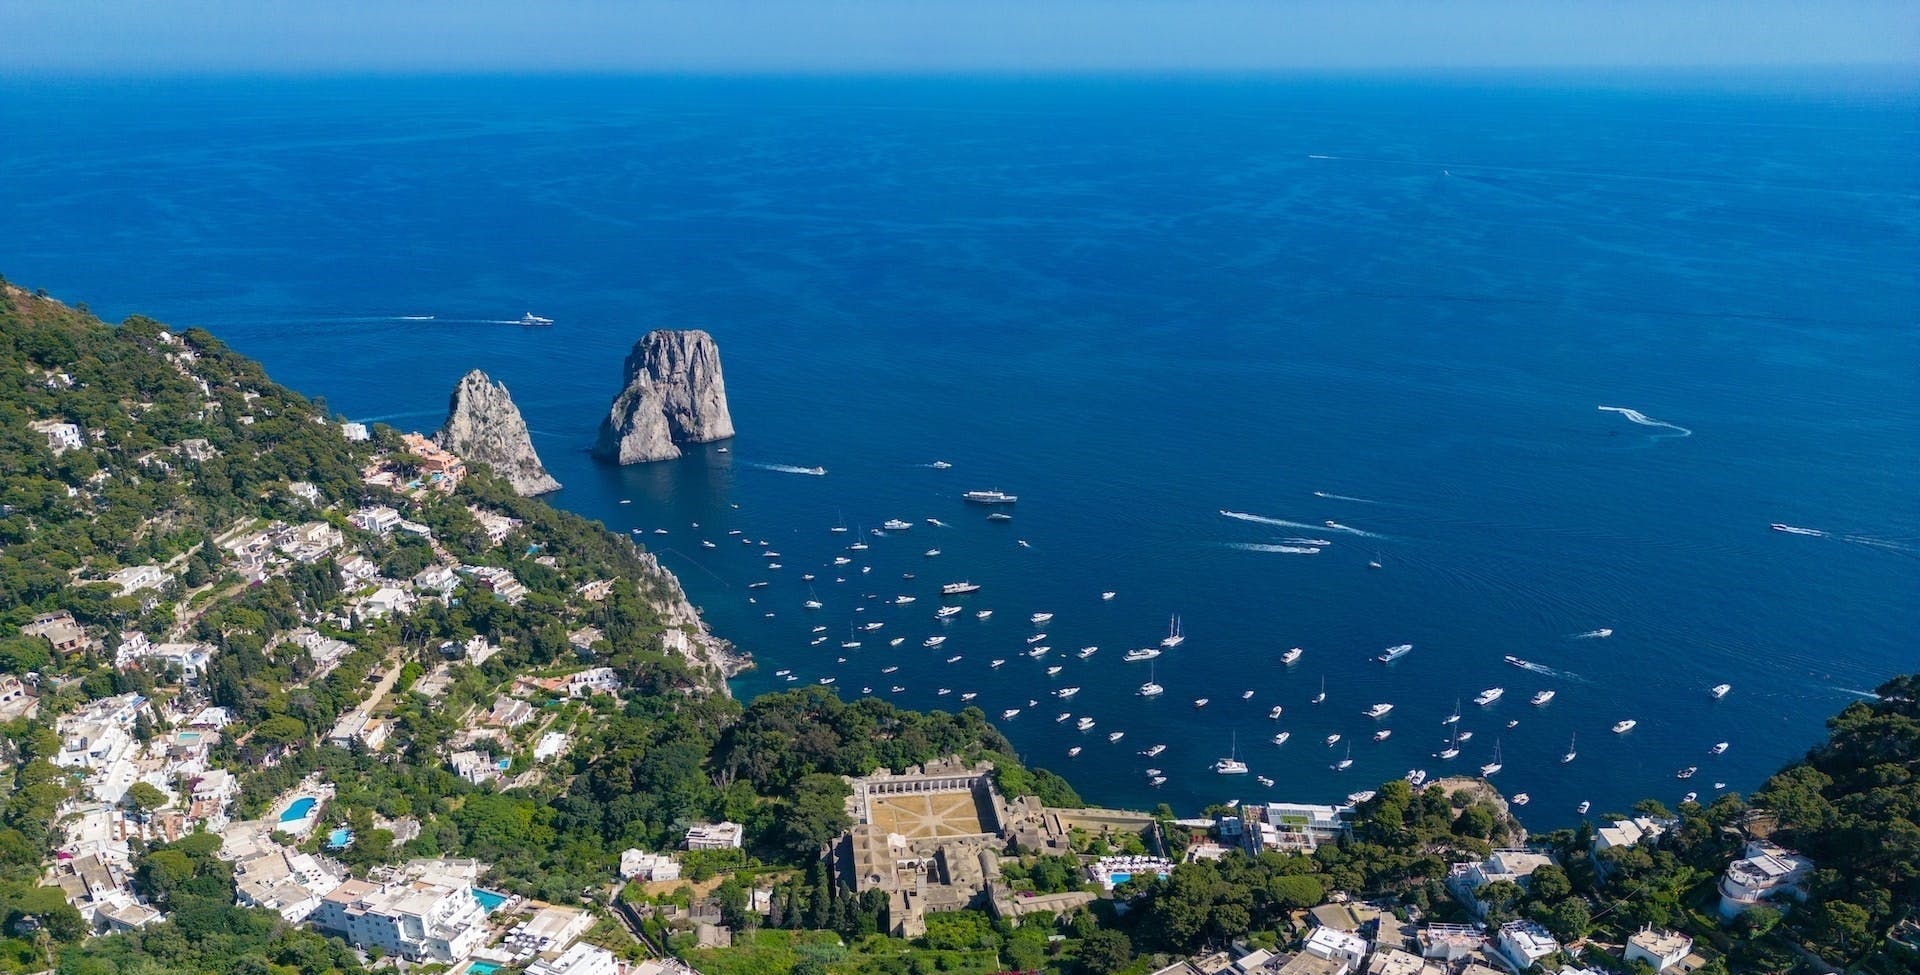 Full-Day Boat Trip to Capri from Positano or Praiano